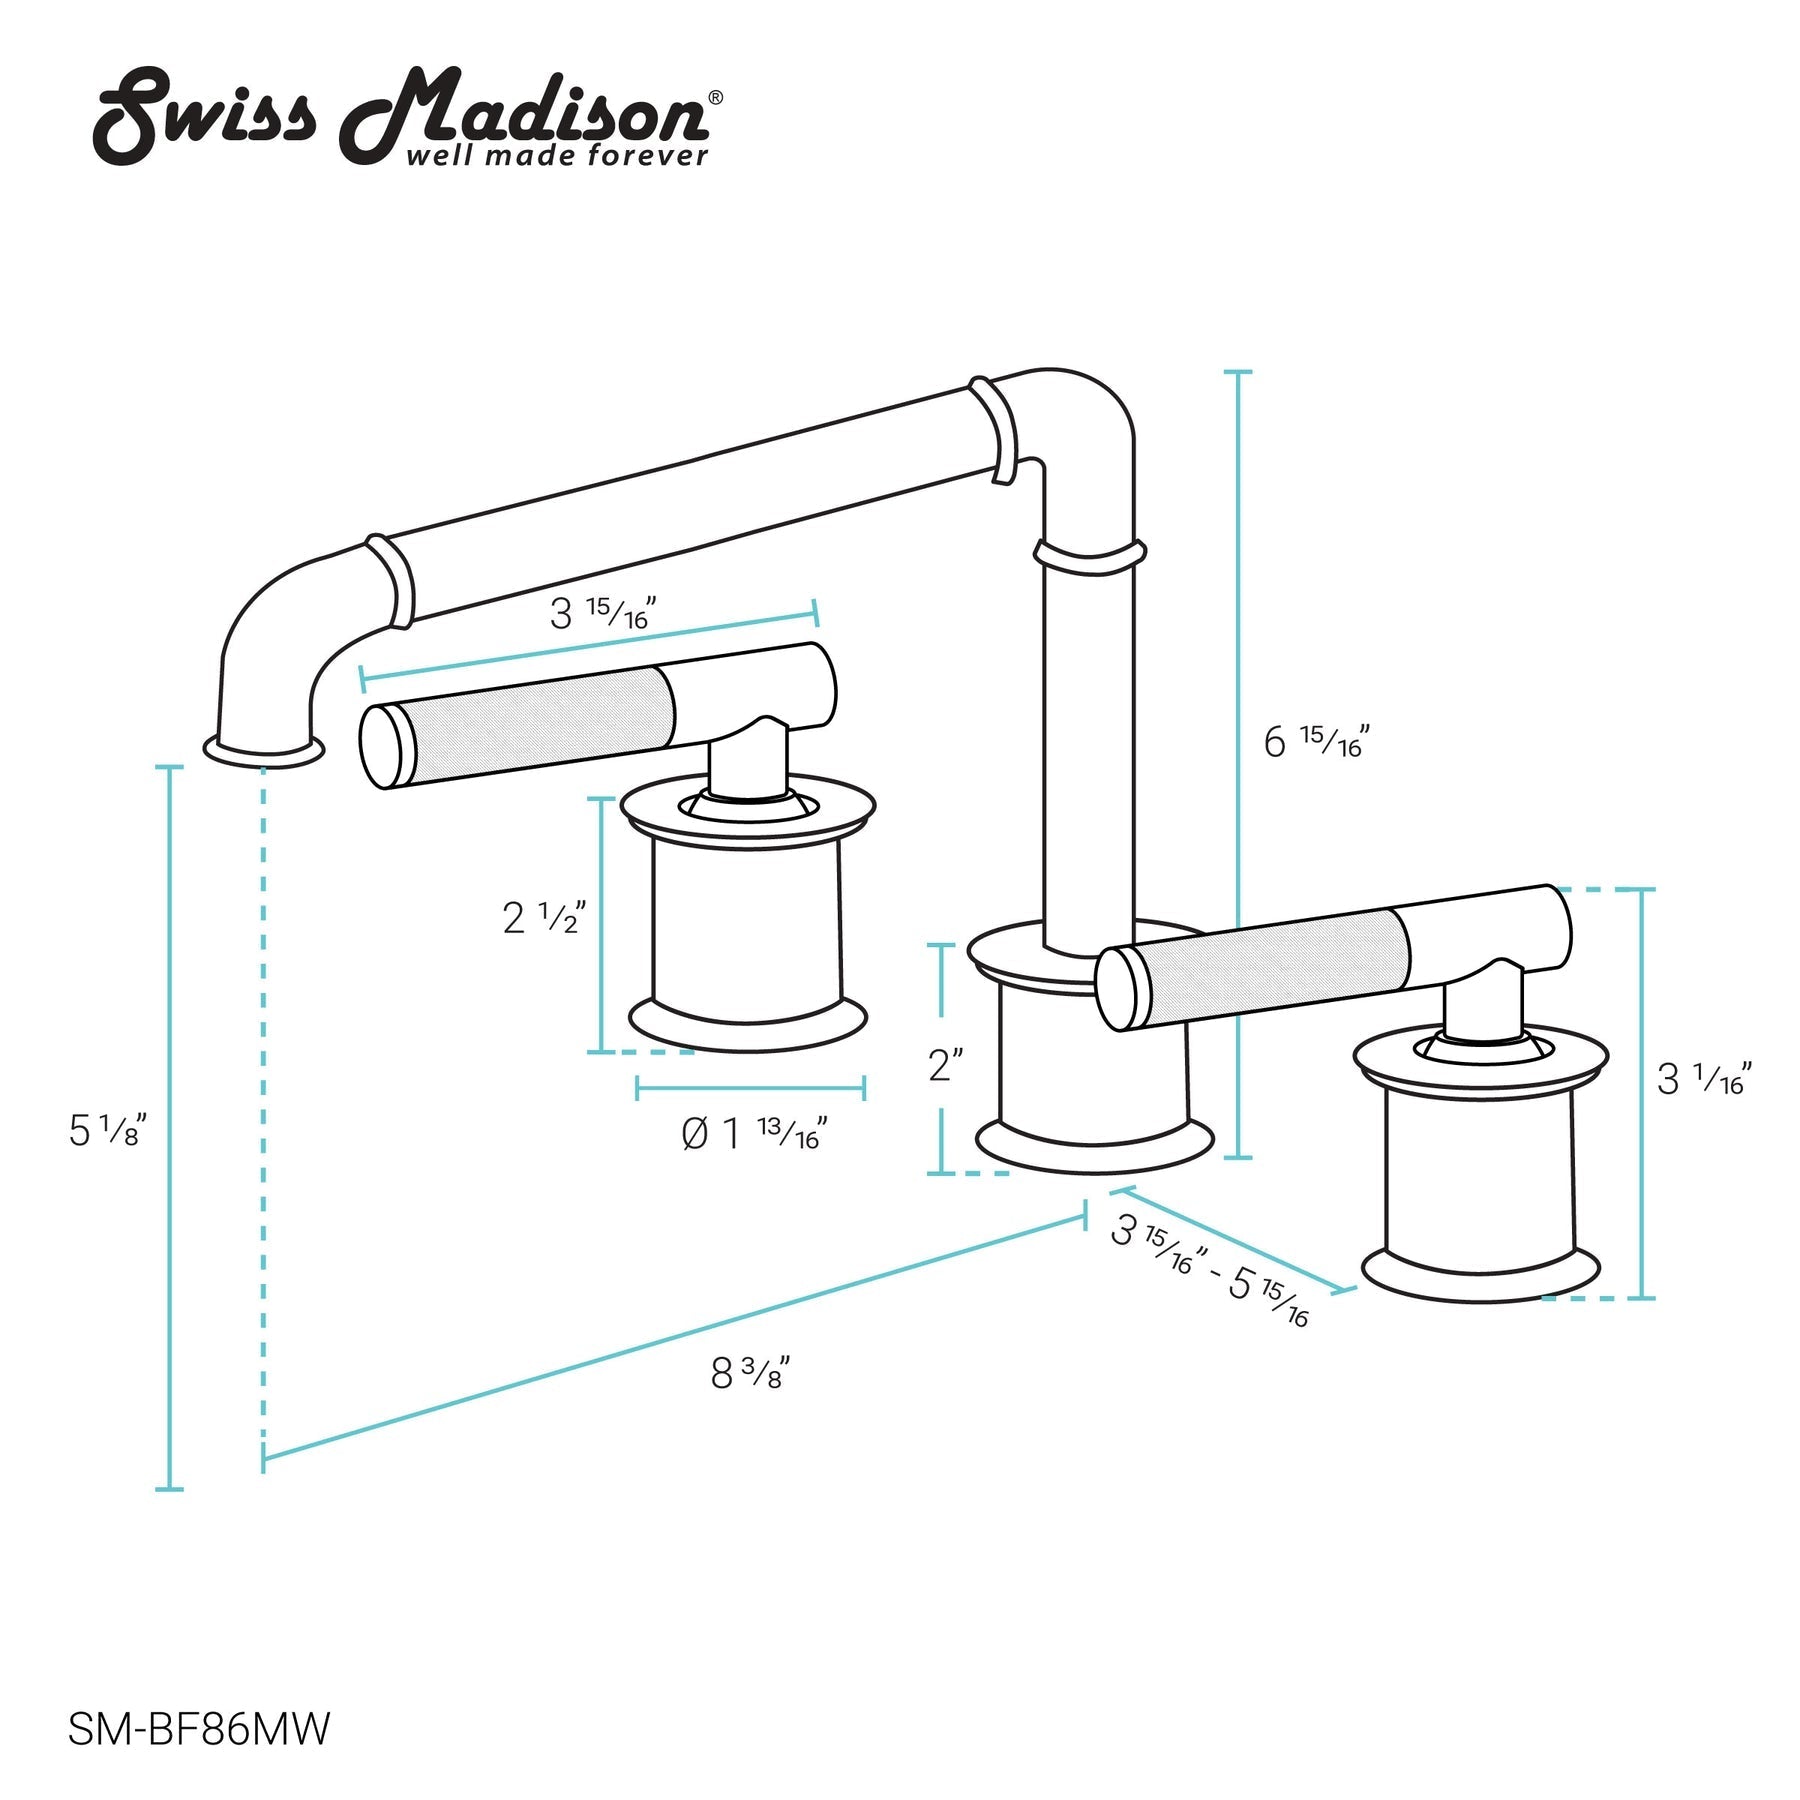 Swiss Madison Avallon 8 in. Widespread, Sleek Handle, Bathroom Faucet - SM-BF86